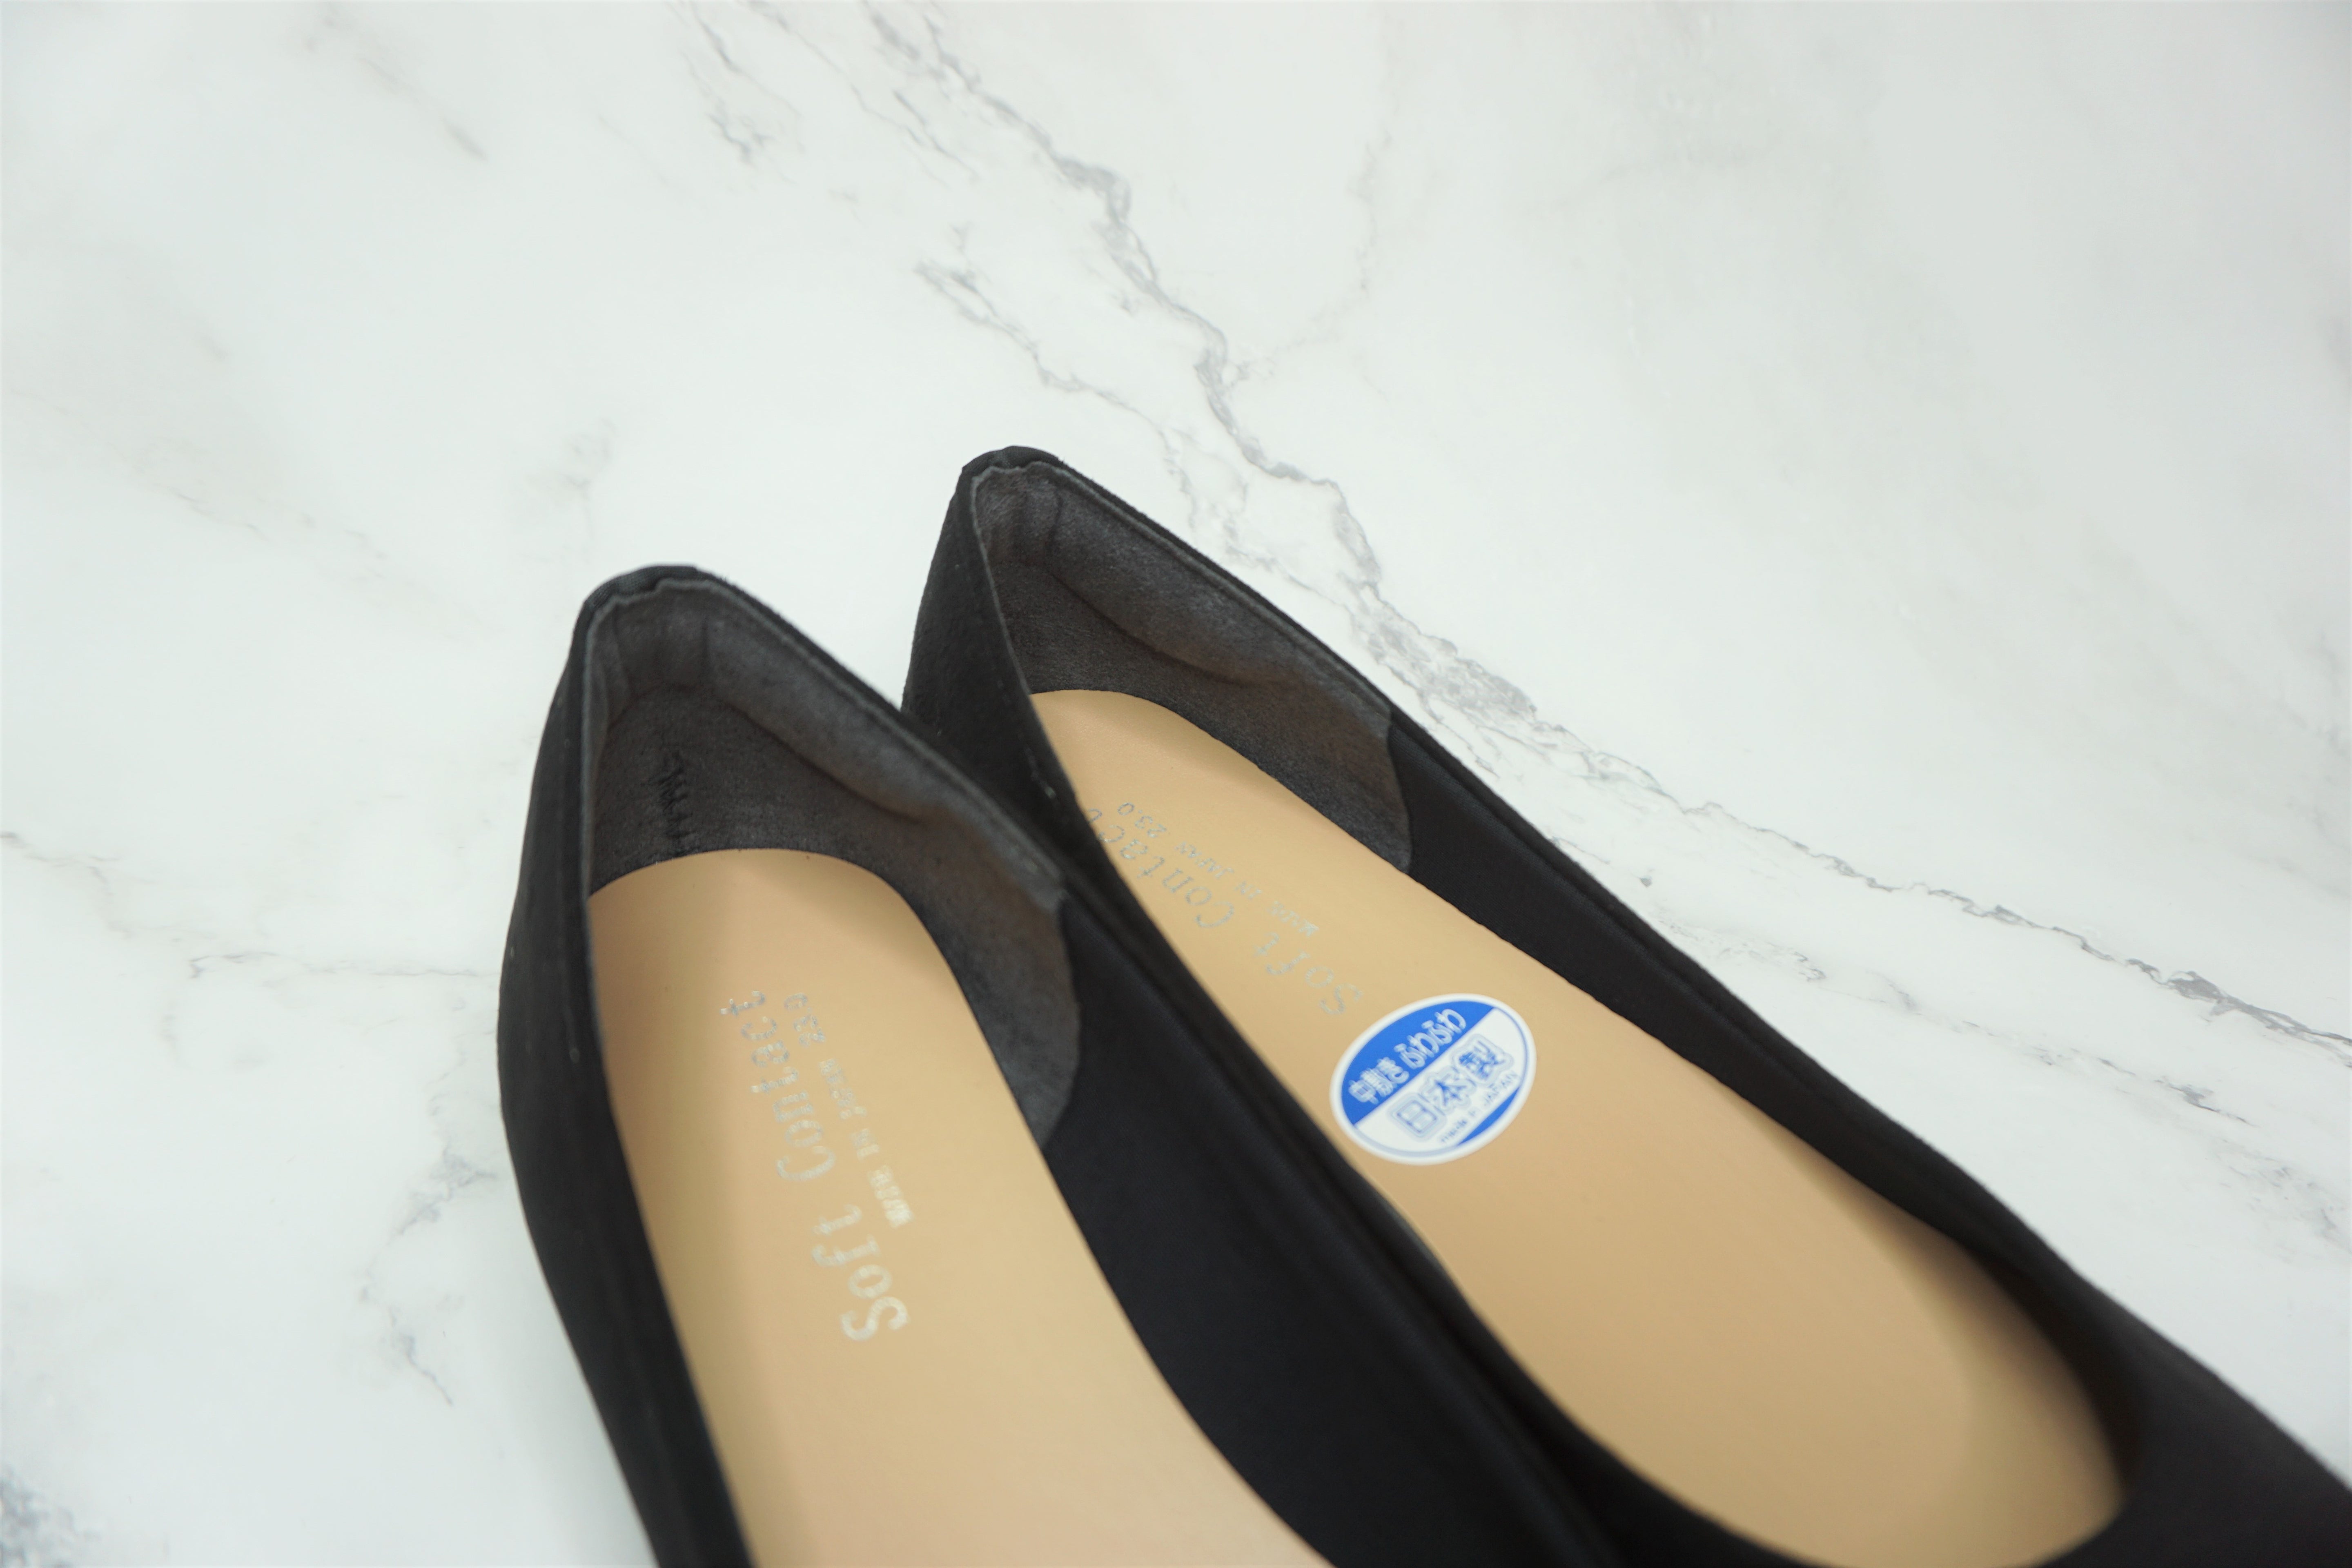 Japan Flannel Flats Soles-SOFT CONTACT-BK-JP/TW Size-1: 230-偉豐鞋 WELL SHOE HK-Well Shoe-偉豐鞋-偉豐網-荃灣鞋店-Functional shoes-Hong Kong Tsuen Wan Shoe Store-Tai Wan Shoe-Japan Shoe-高品質功能鞋-台灣進口鞋-日本進口鞋-High-quality shoes-鞋類配件-荃灣進口鞋-香港鞋店-優質鞋類產品-水靴-帆布鞋-廚師鞋-香港鞋品牌-Hong Kong Shoes brand-長者鞋-Hong Kong Rain Boots-Kitchen shoes-Cruthes-Slipper-Well Shoe Hong Kong-Anello-Arriba-休閒鞋-舒適鞋-健康鞋-皮鞋-Healthy shoes-Leather shoes-Hiking shoes